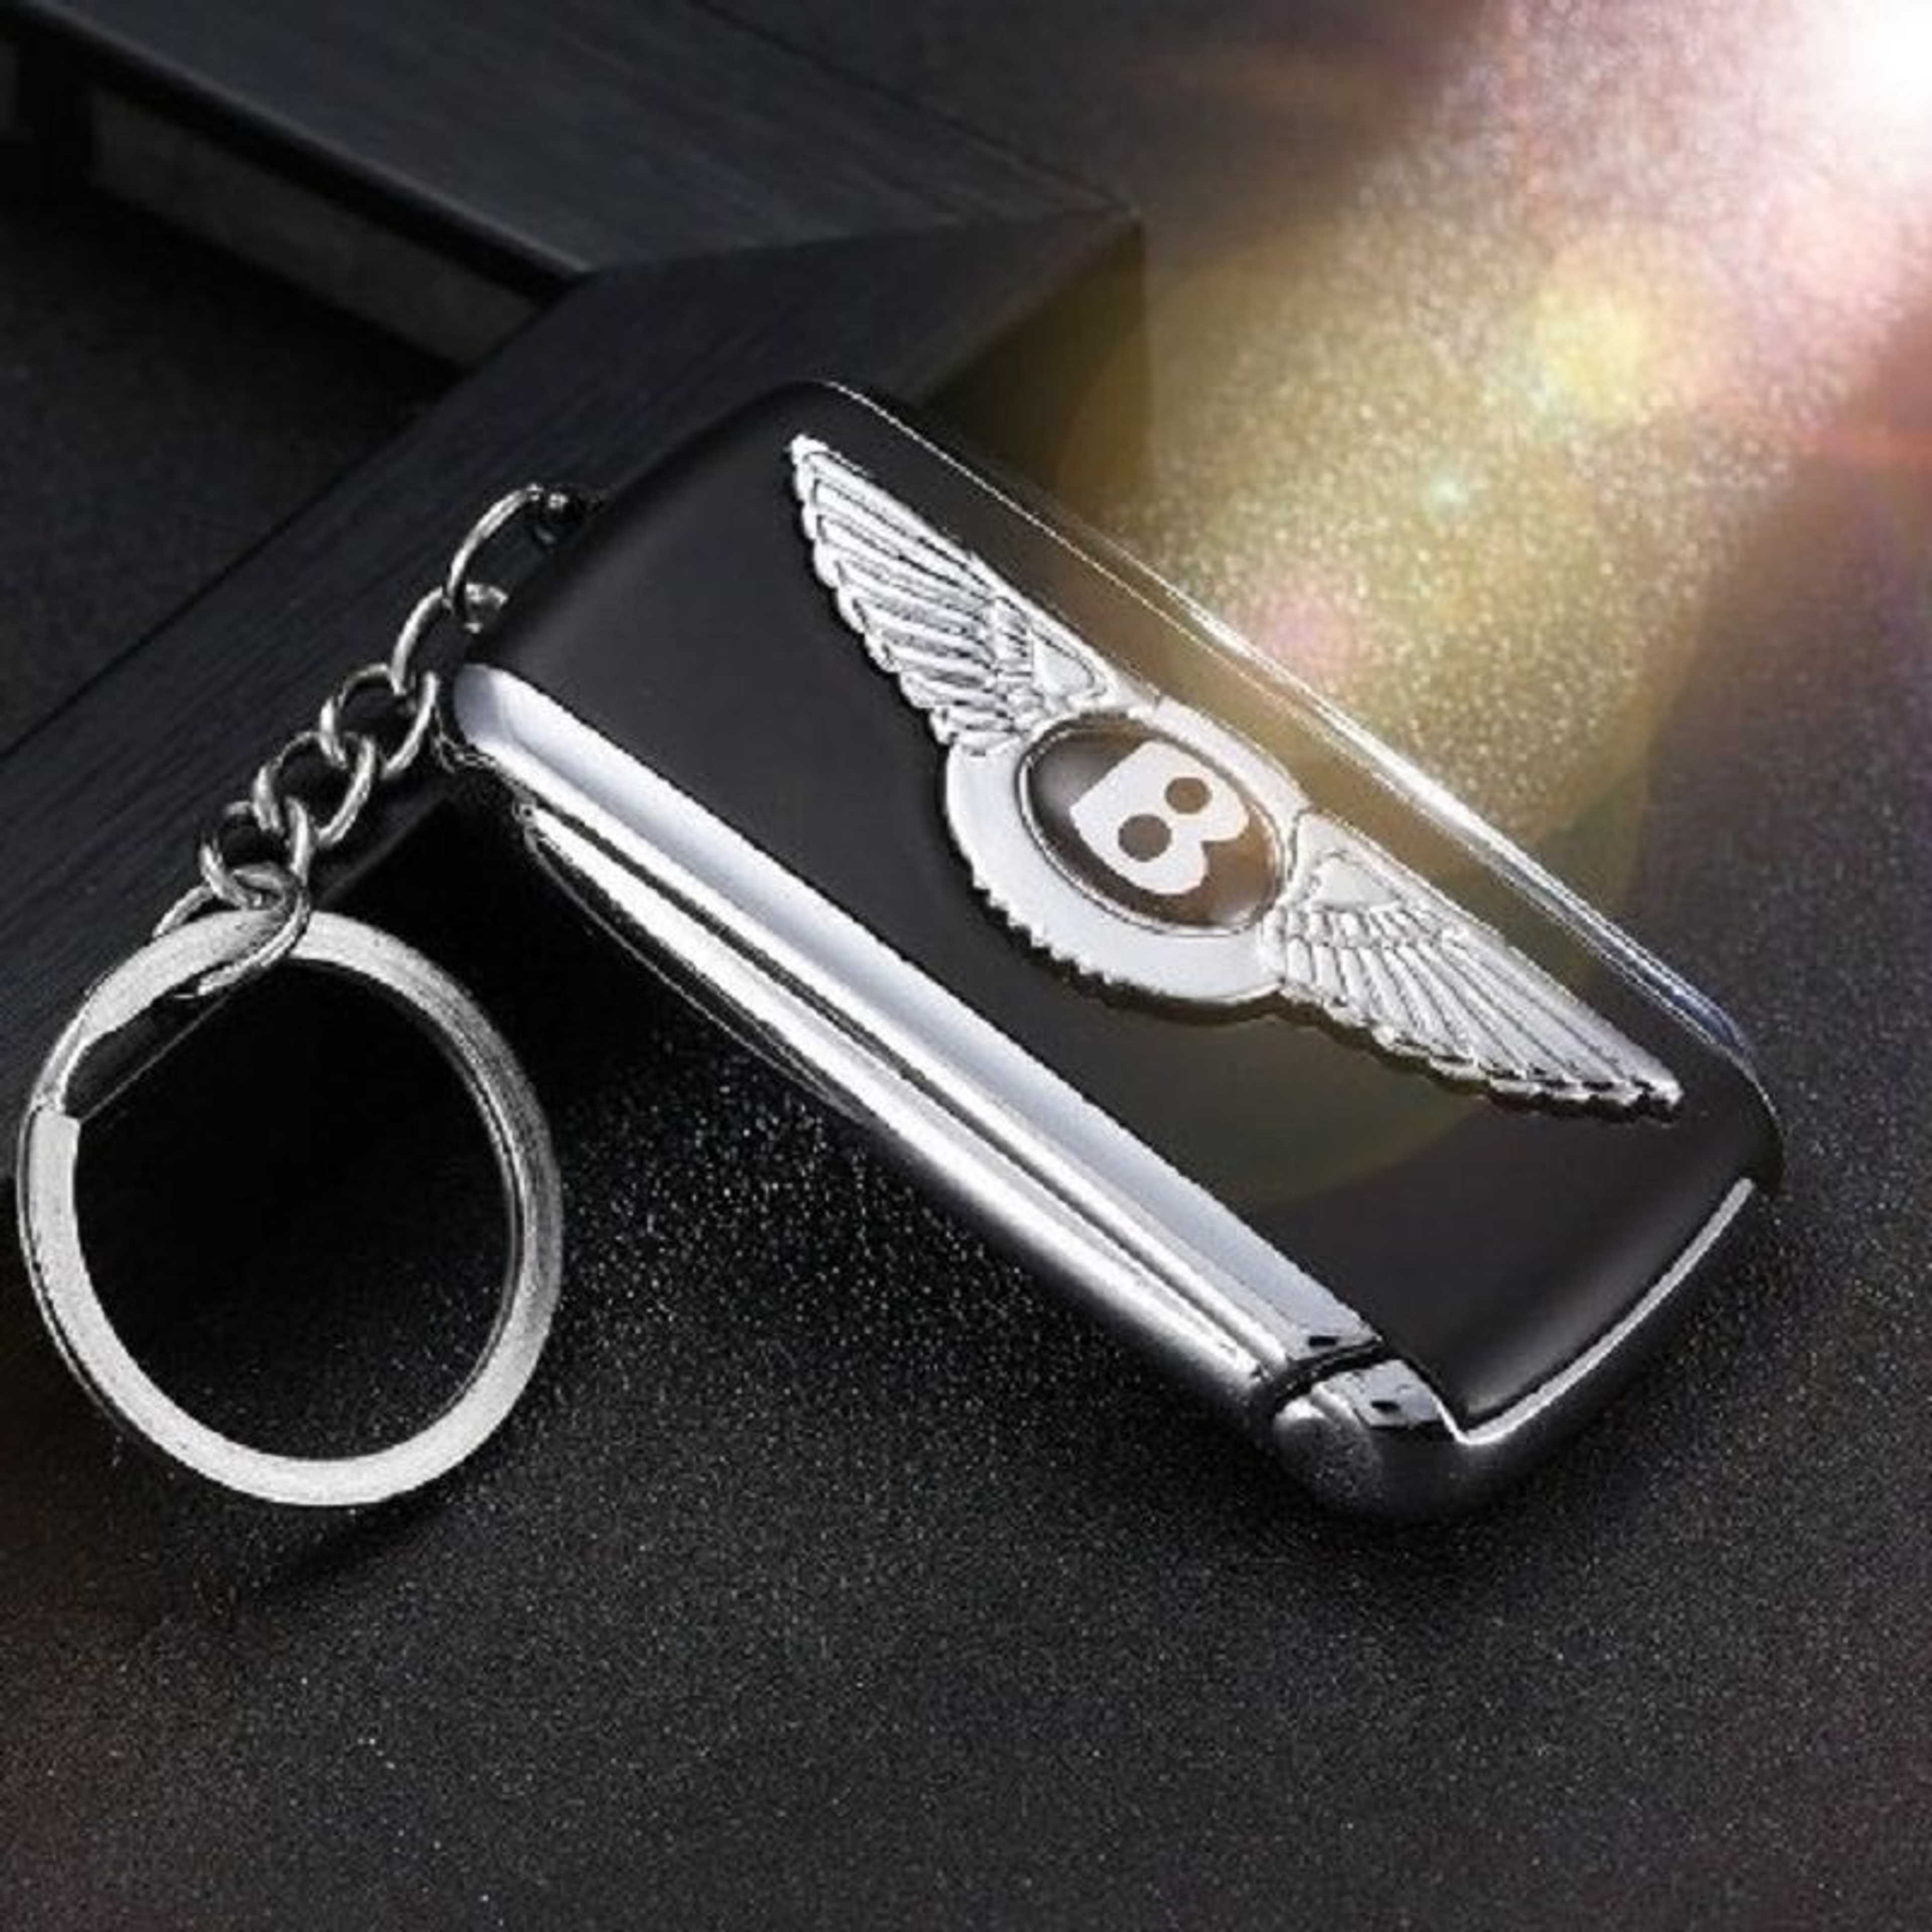 Bentley Car Creative Key Designed High Quality Key Chain Gas Lighter